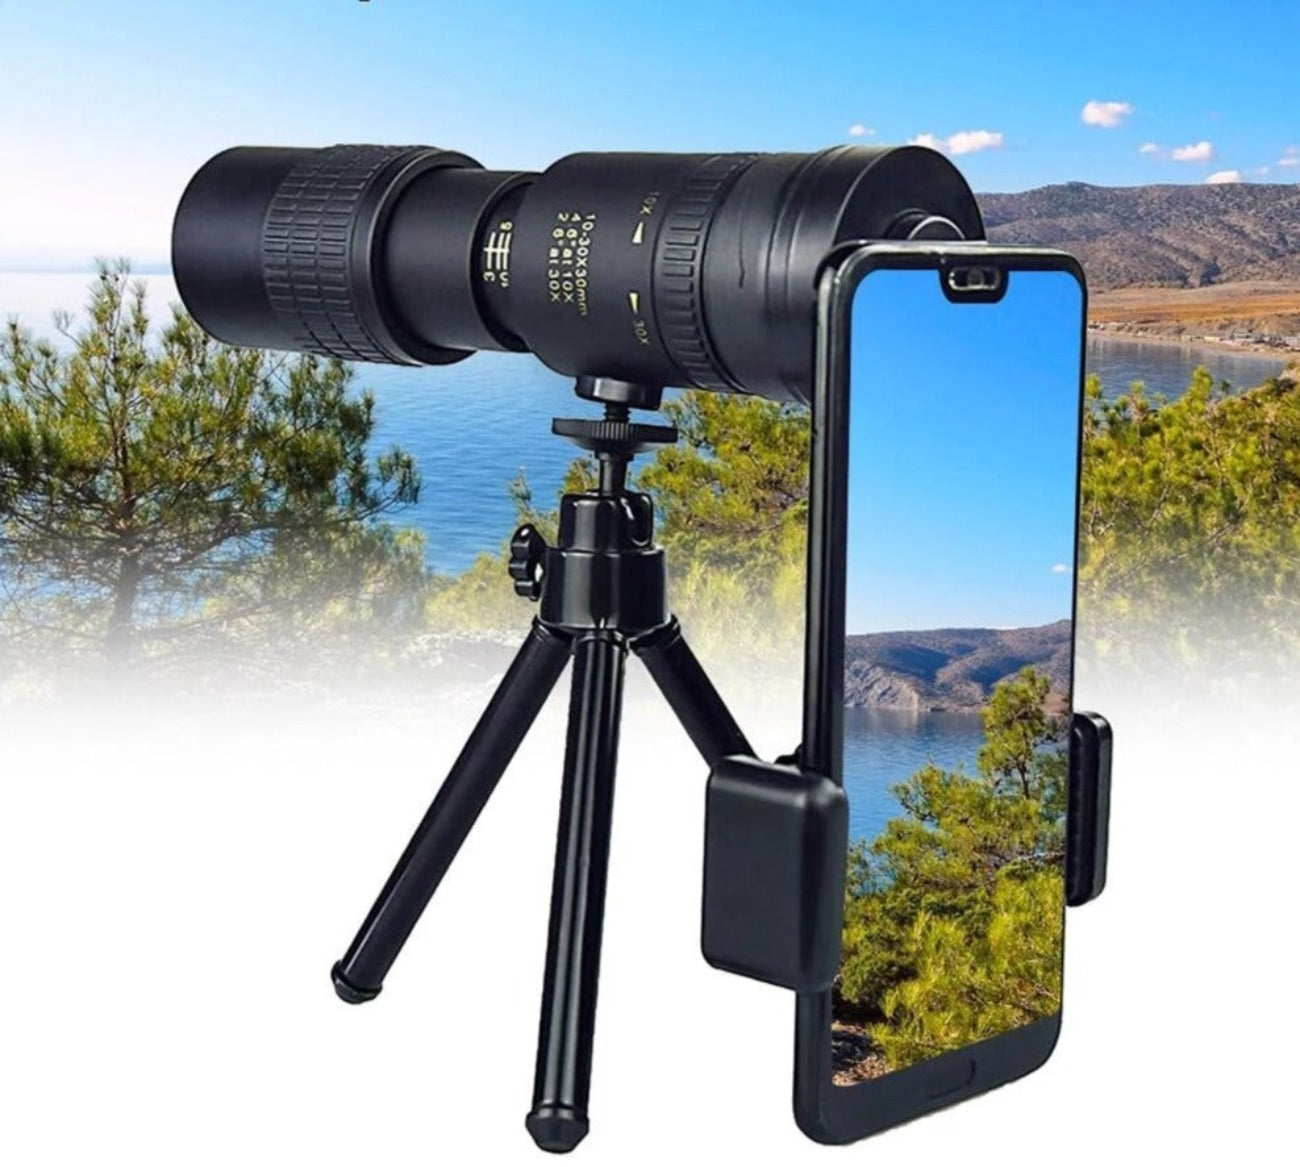 4K 10-300X40mm Super Telephoto Zoom Monocular Telescope HD Portable